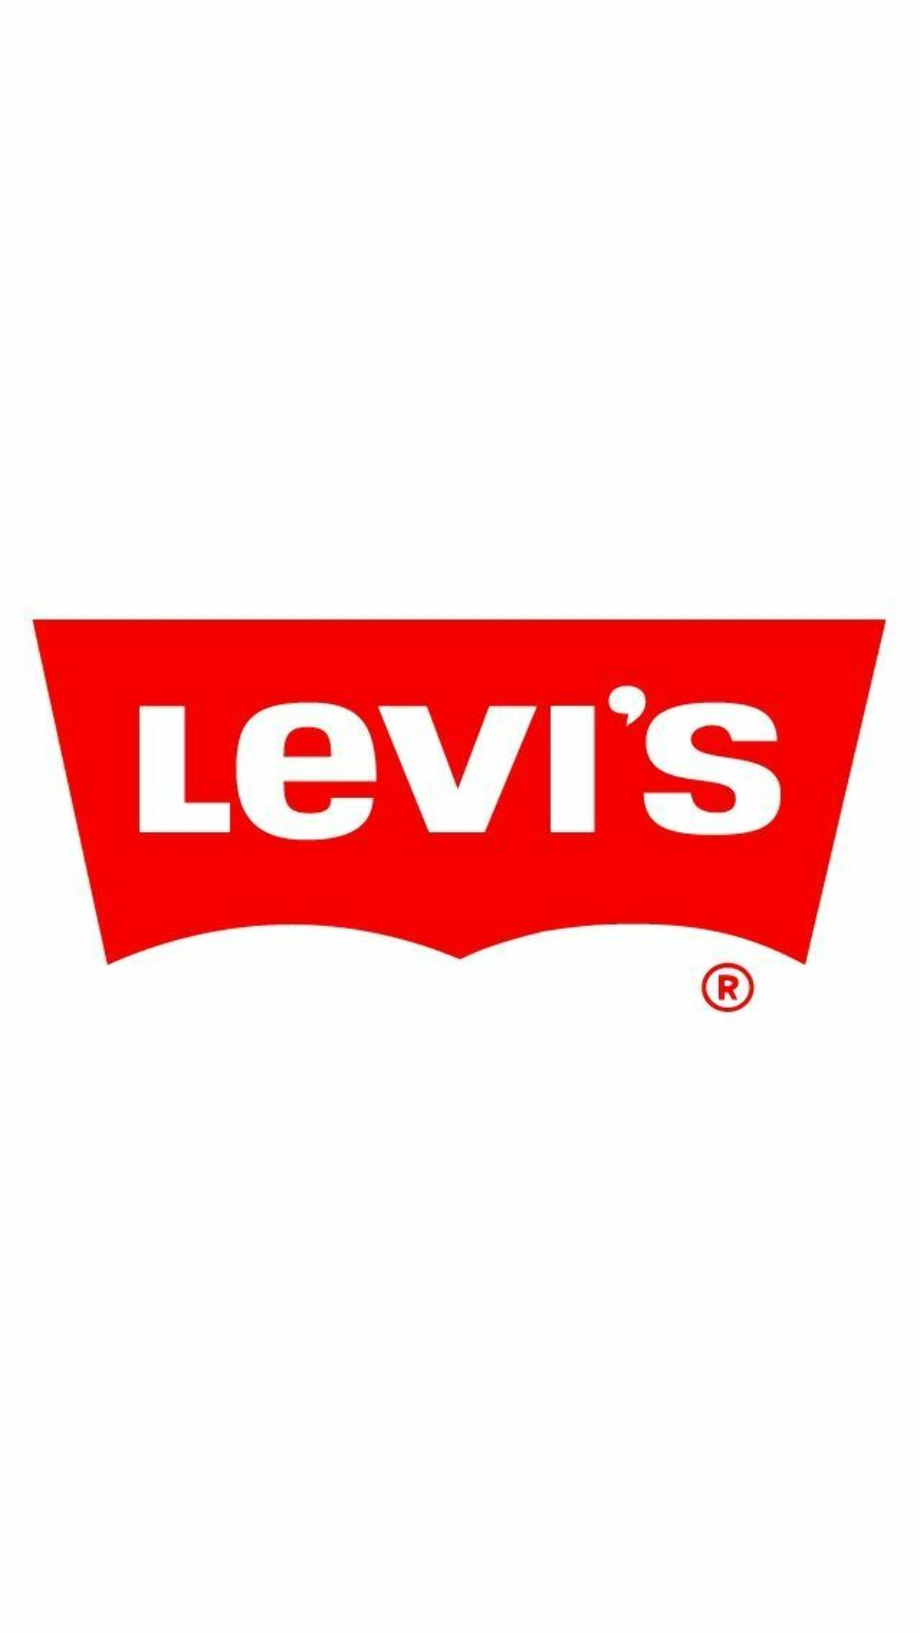 levis logo brand